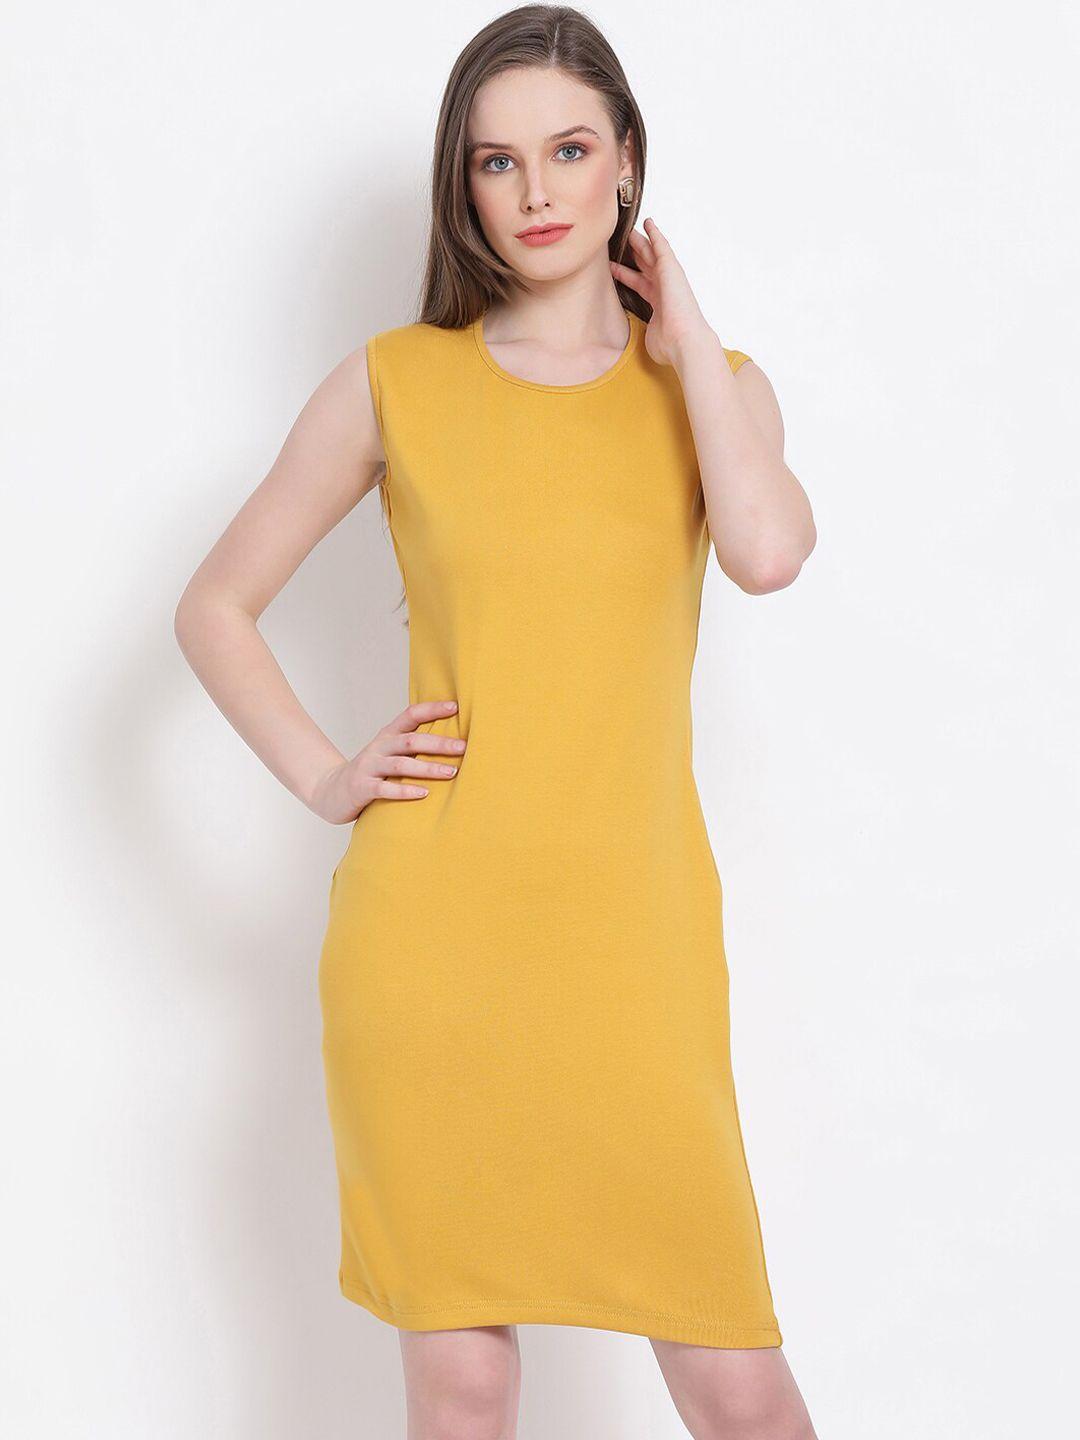 draax fashions yellow sheath dress